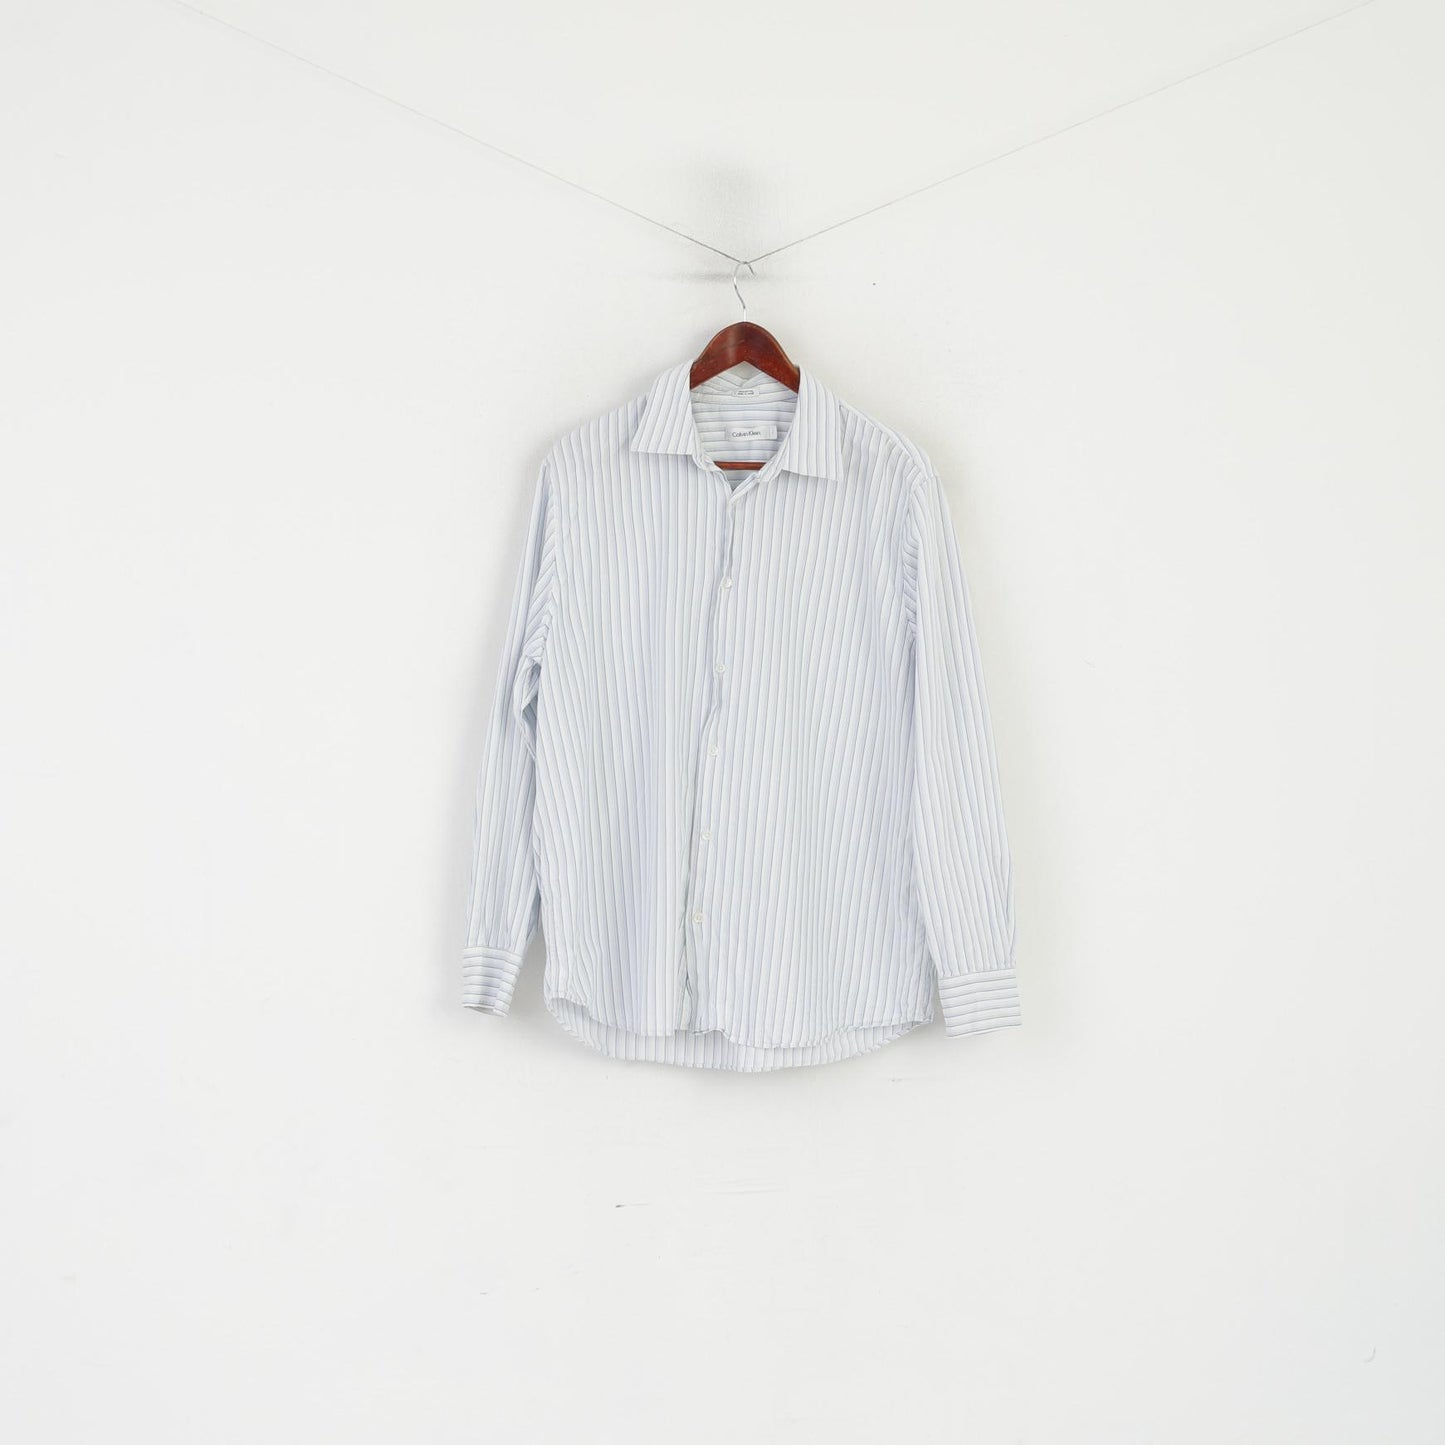 Calvin Klein Men L Casual Shirt White Blue Striped Cotton Long Sleeve Top